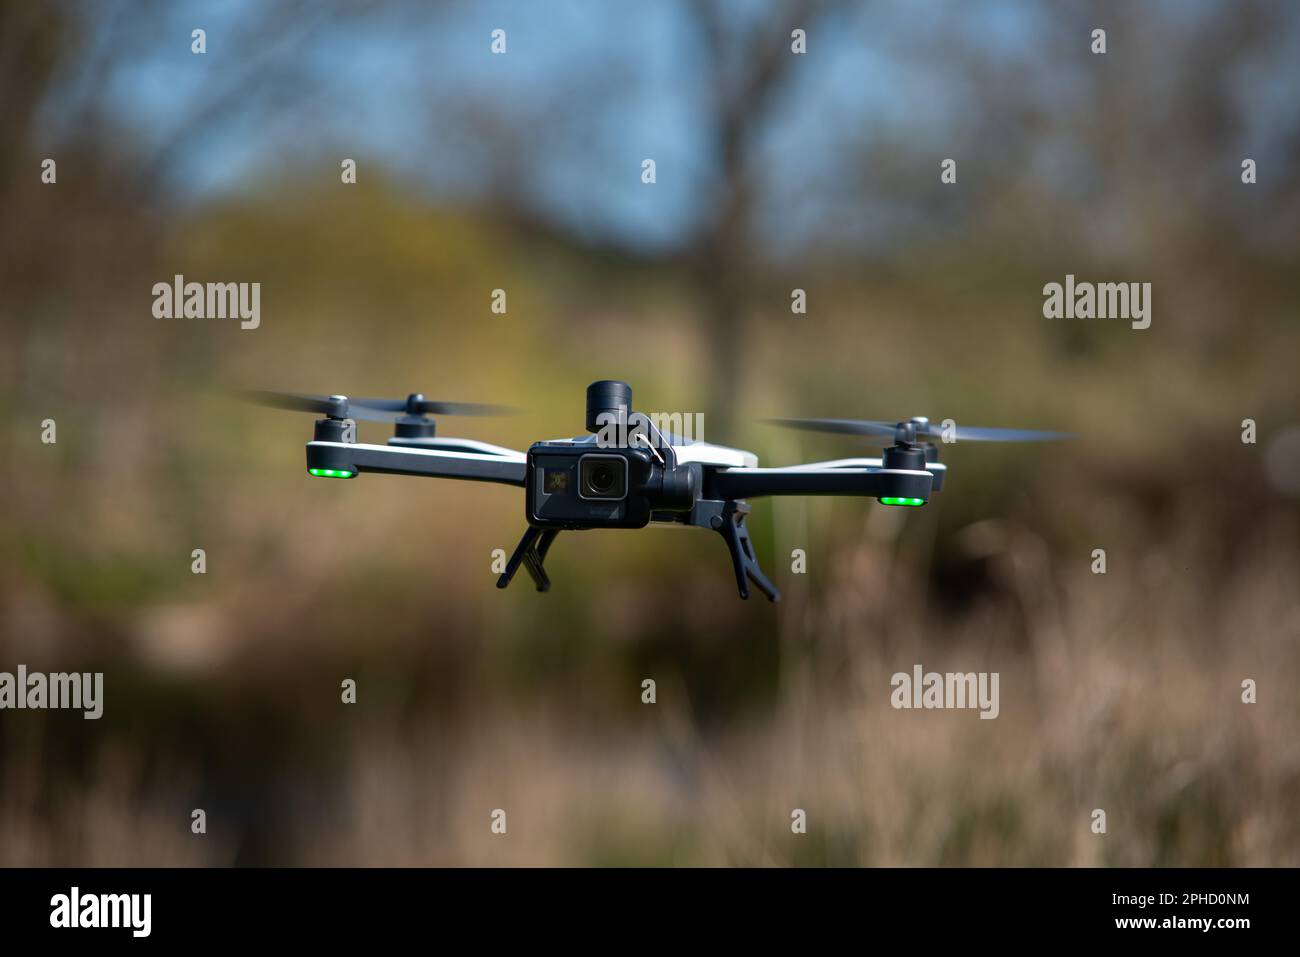 The GoPro Karma drone in flight Stock Photo